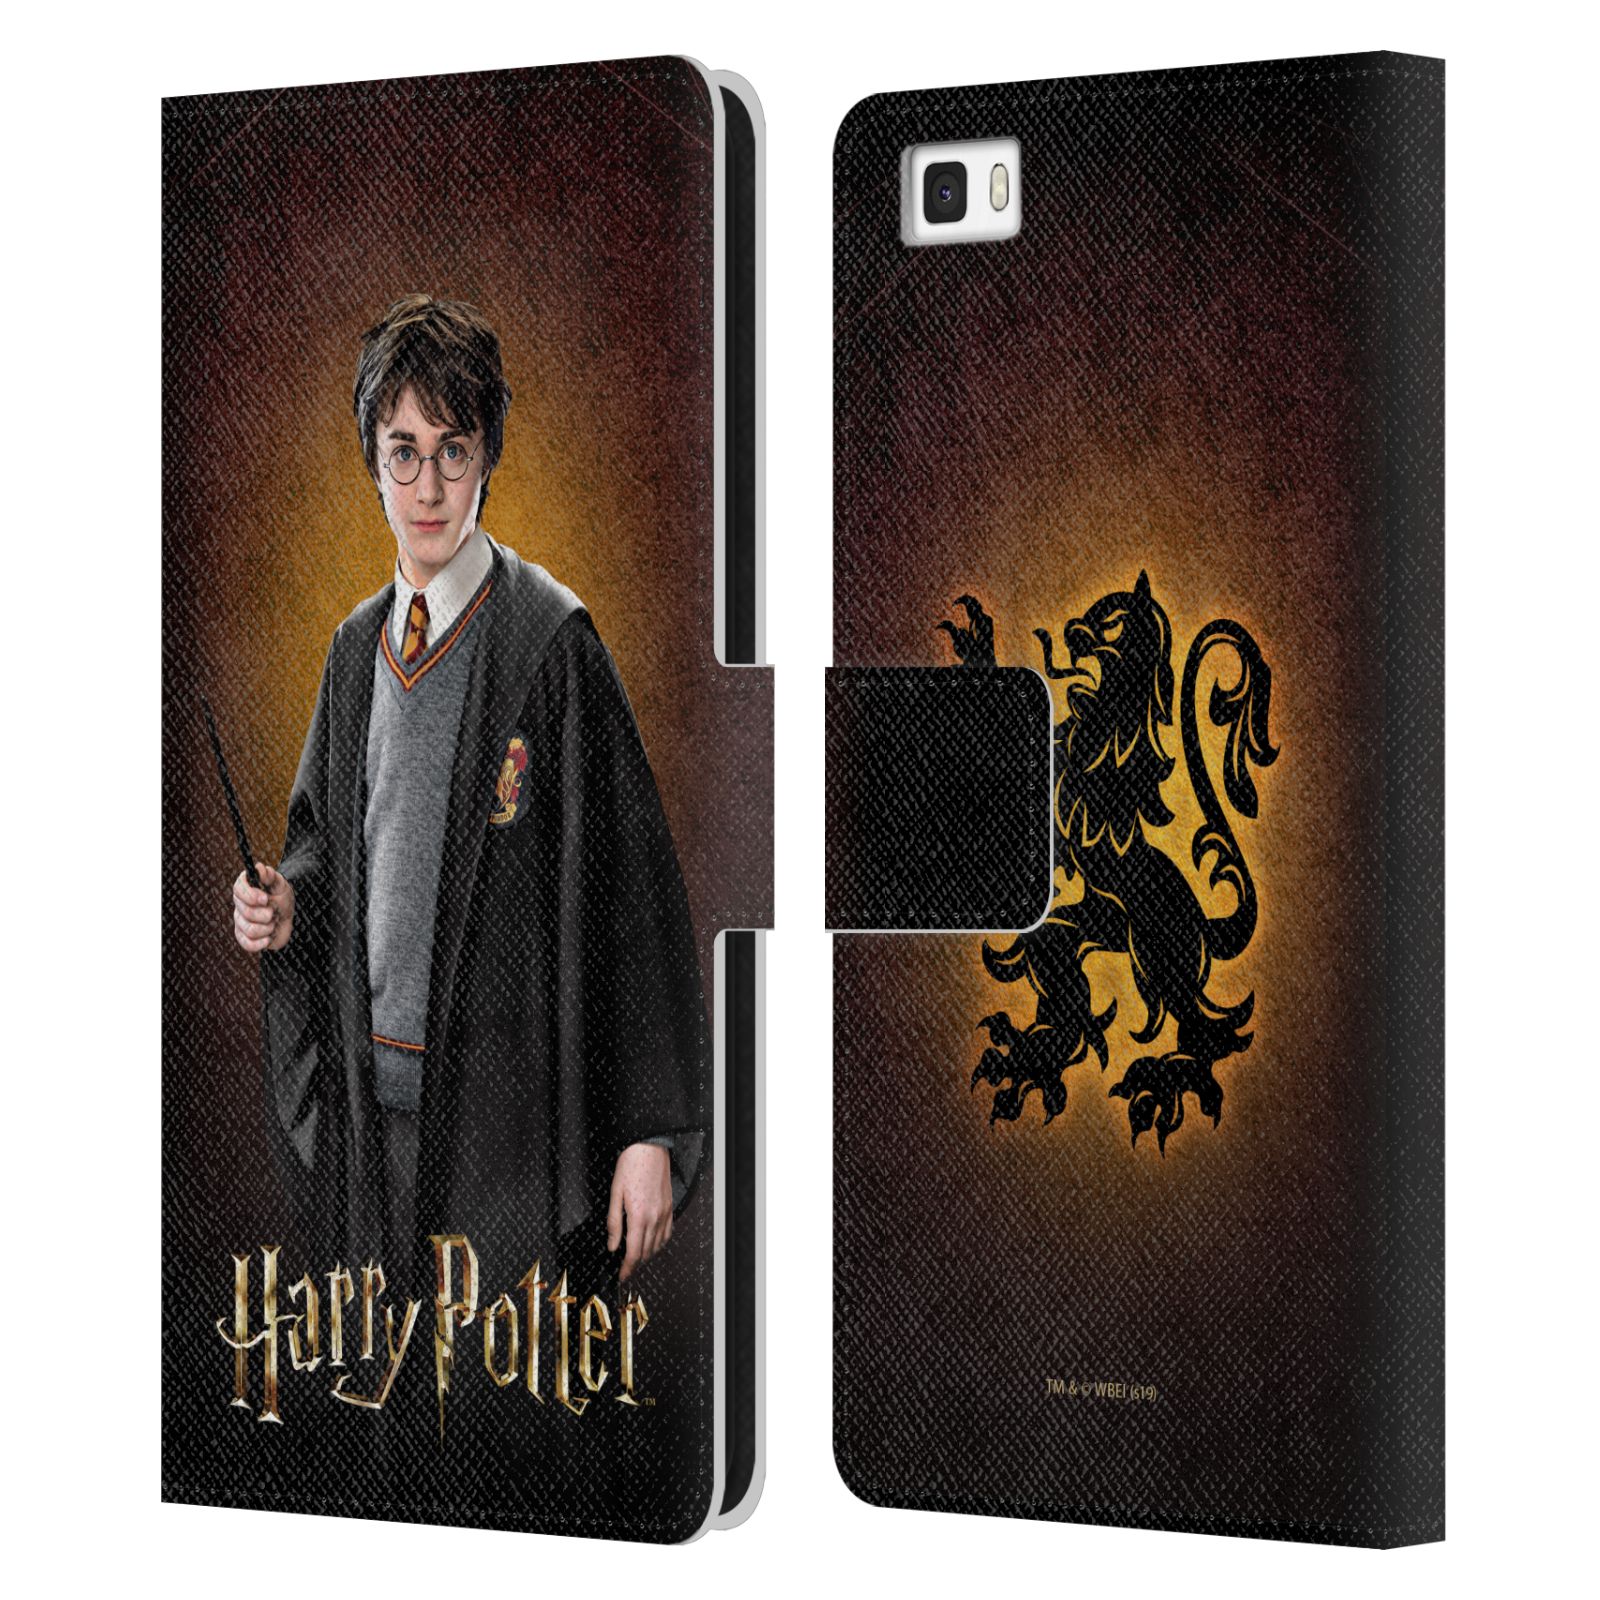 Pouzdro na mobil Huawei P8 LITE - HEAD CASE - Harry Potter - Harry Potter portrét